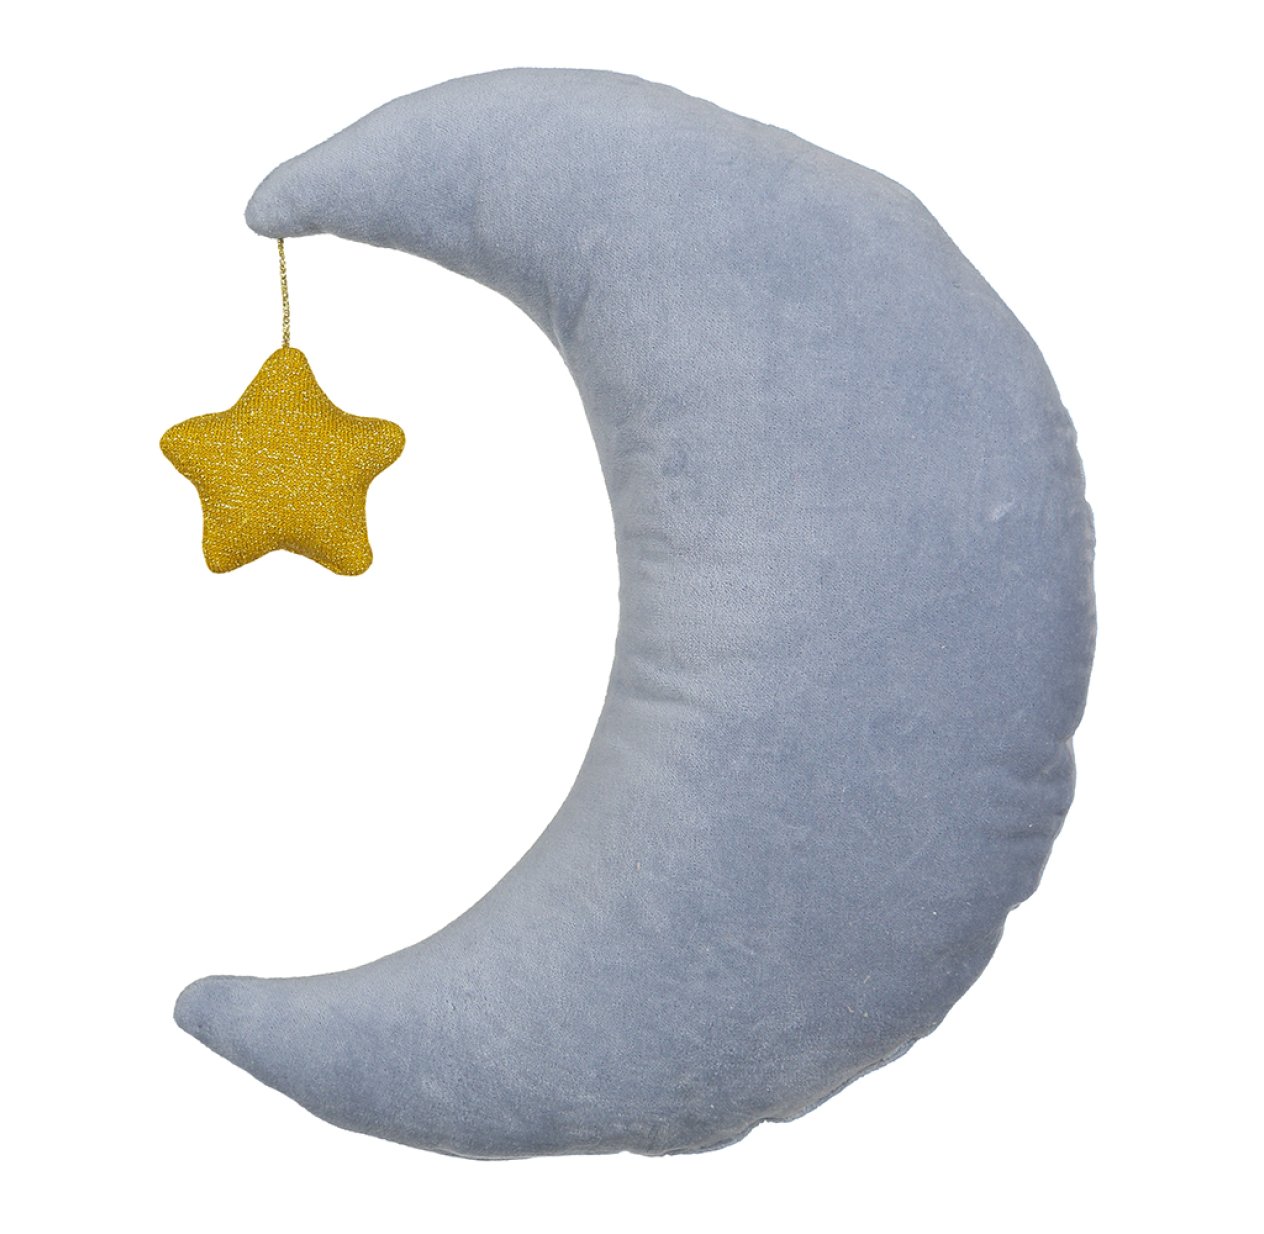 Moon подушки. Подушка Луна. Подушка Луна мягкая игрушка. Сшитая подушка Луна. Подушка Луна месяц.